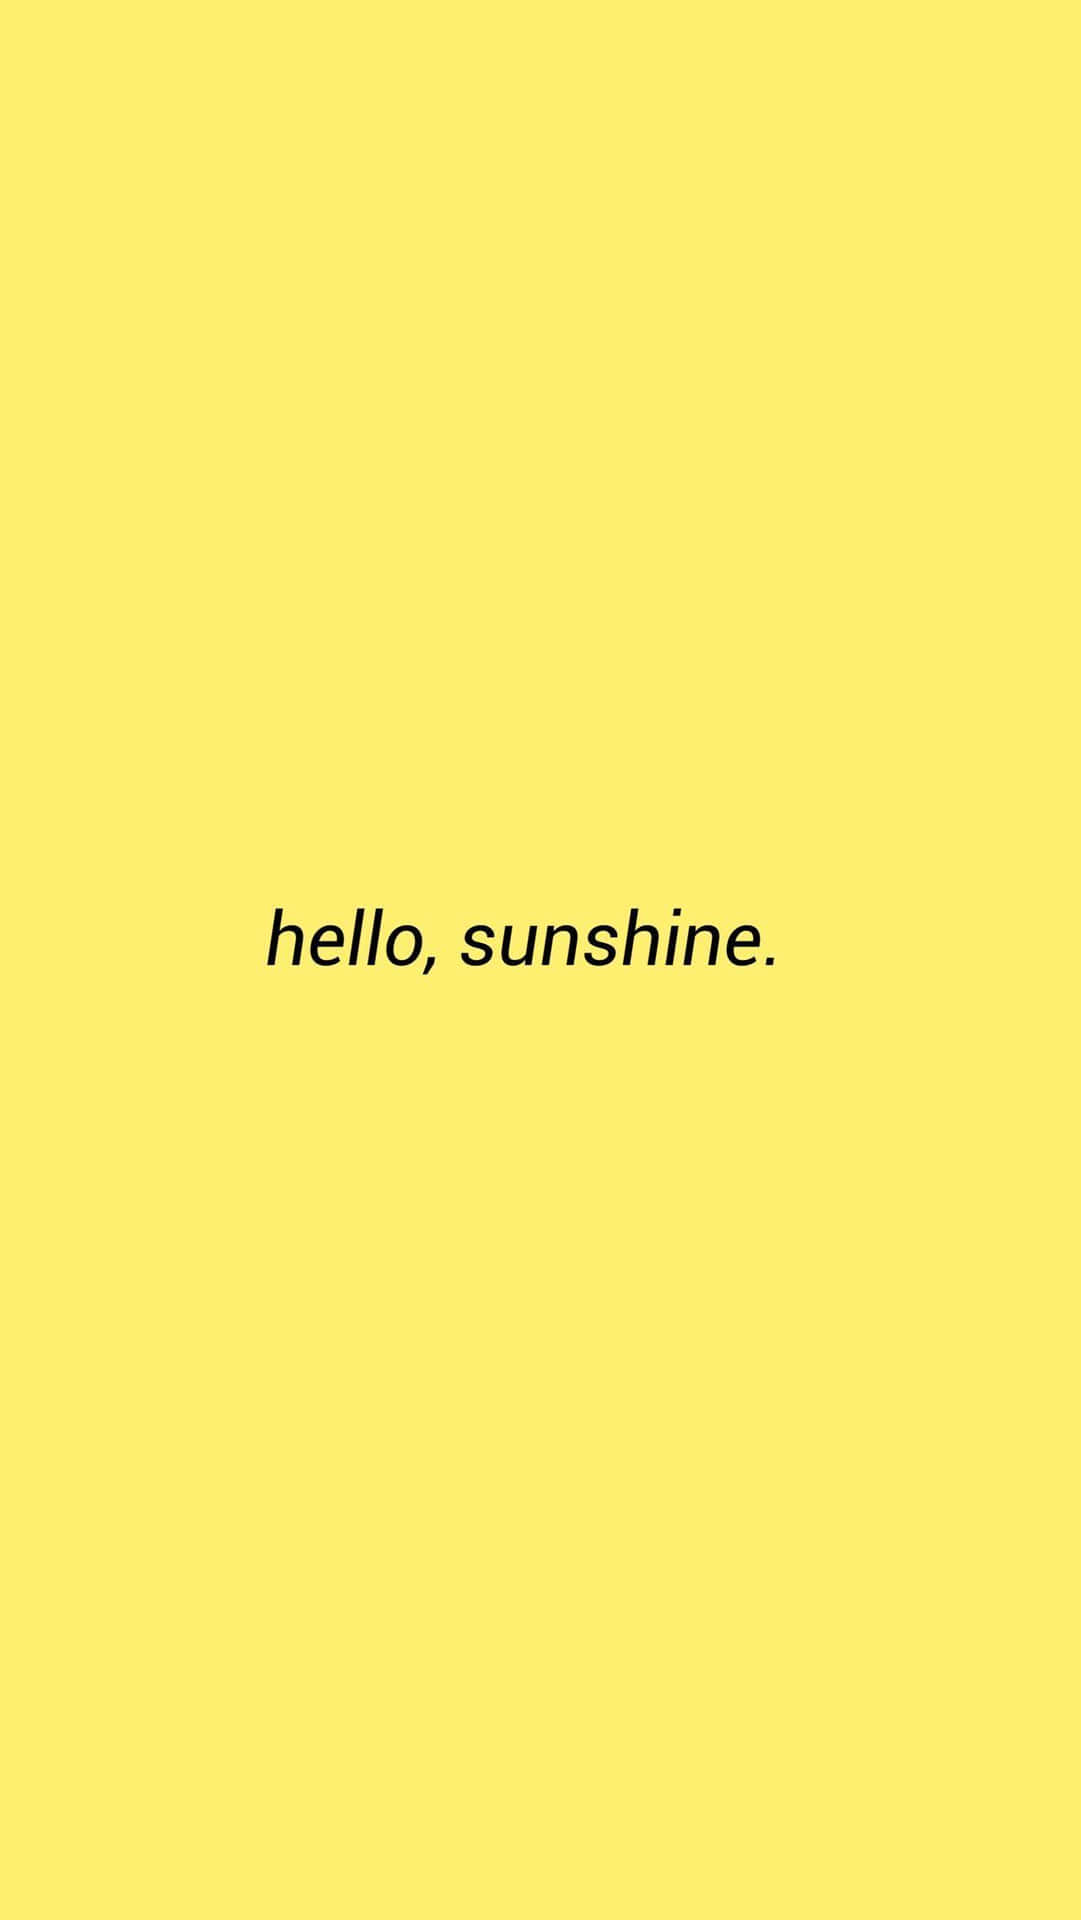 Hello Sunshine On A Yellow Background